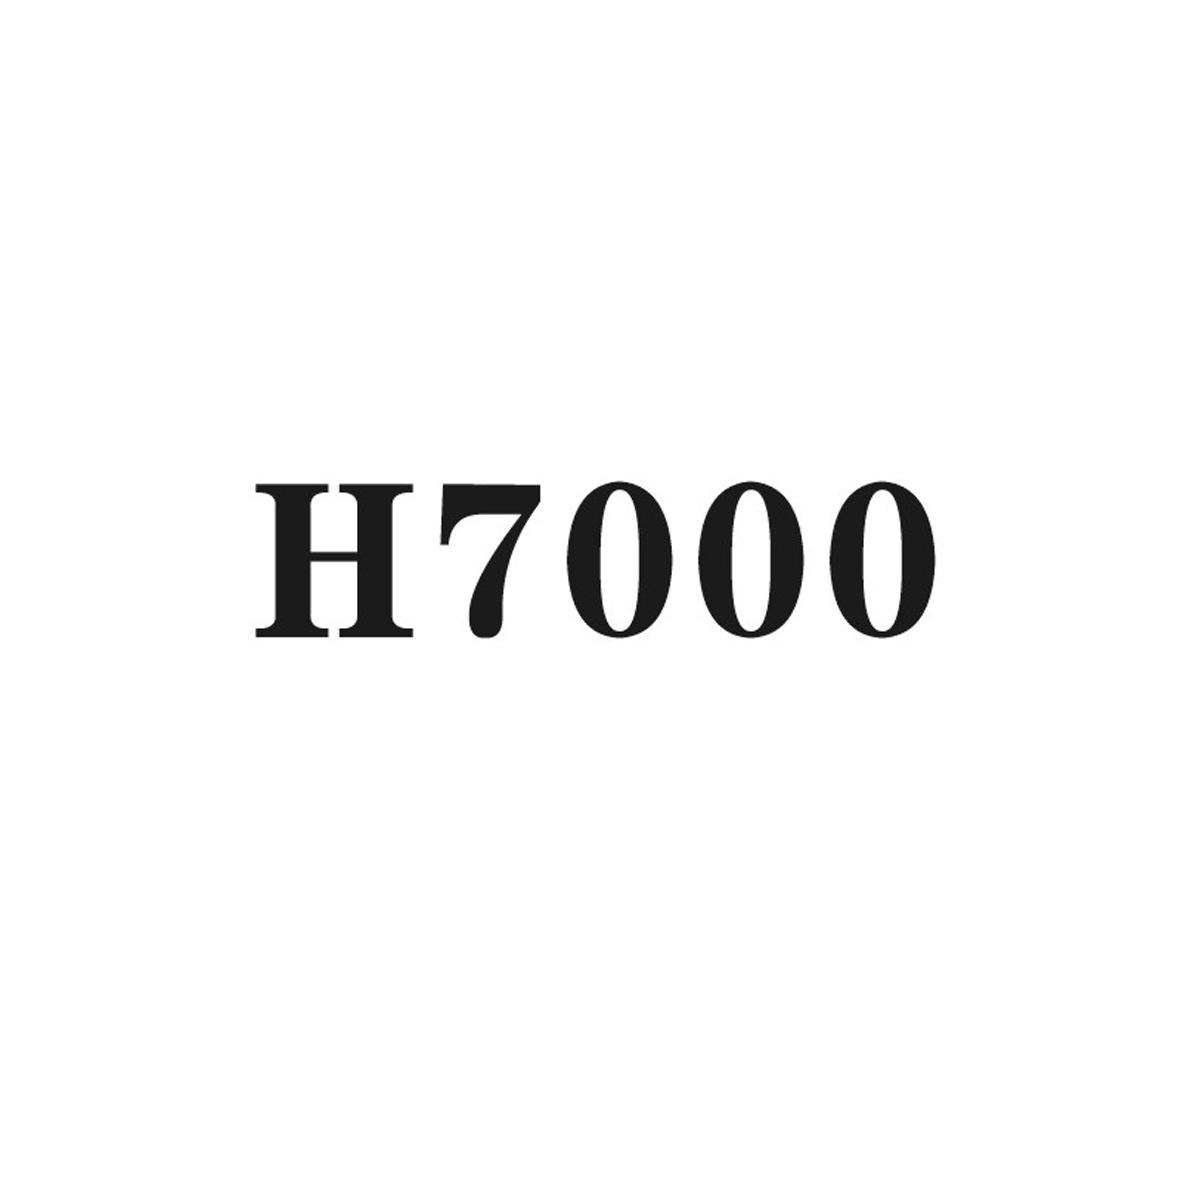 H 7000